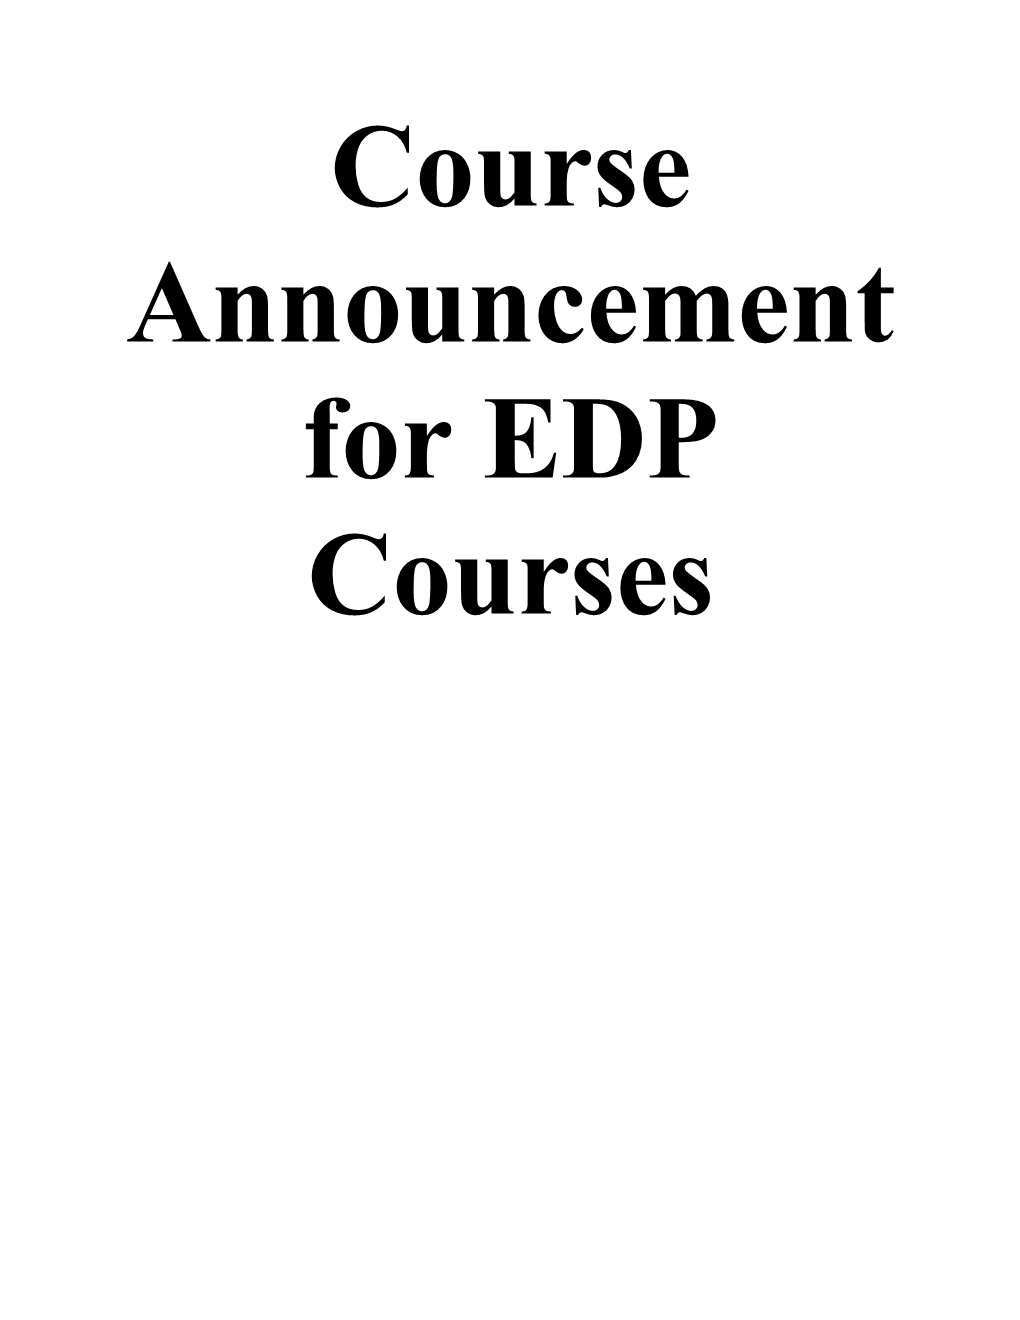 Course Announcement for EDP Courses